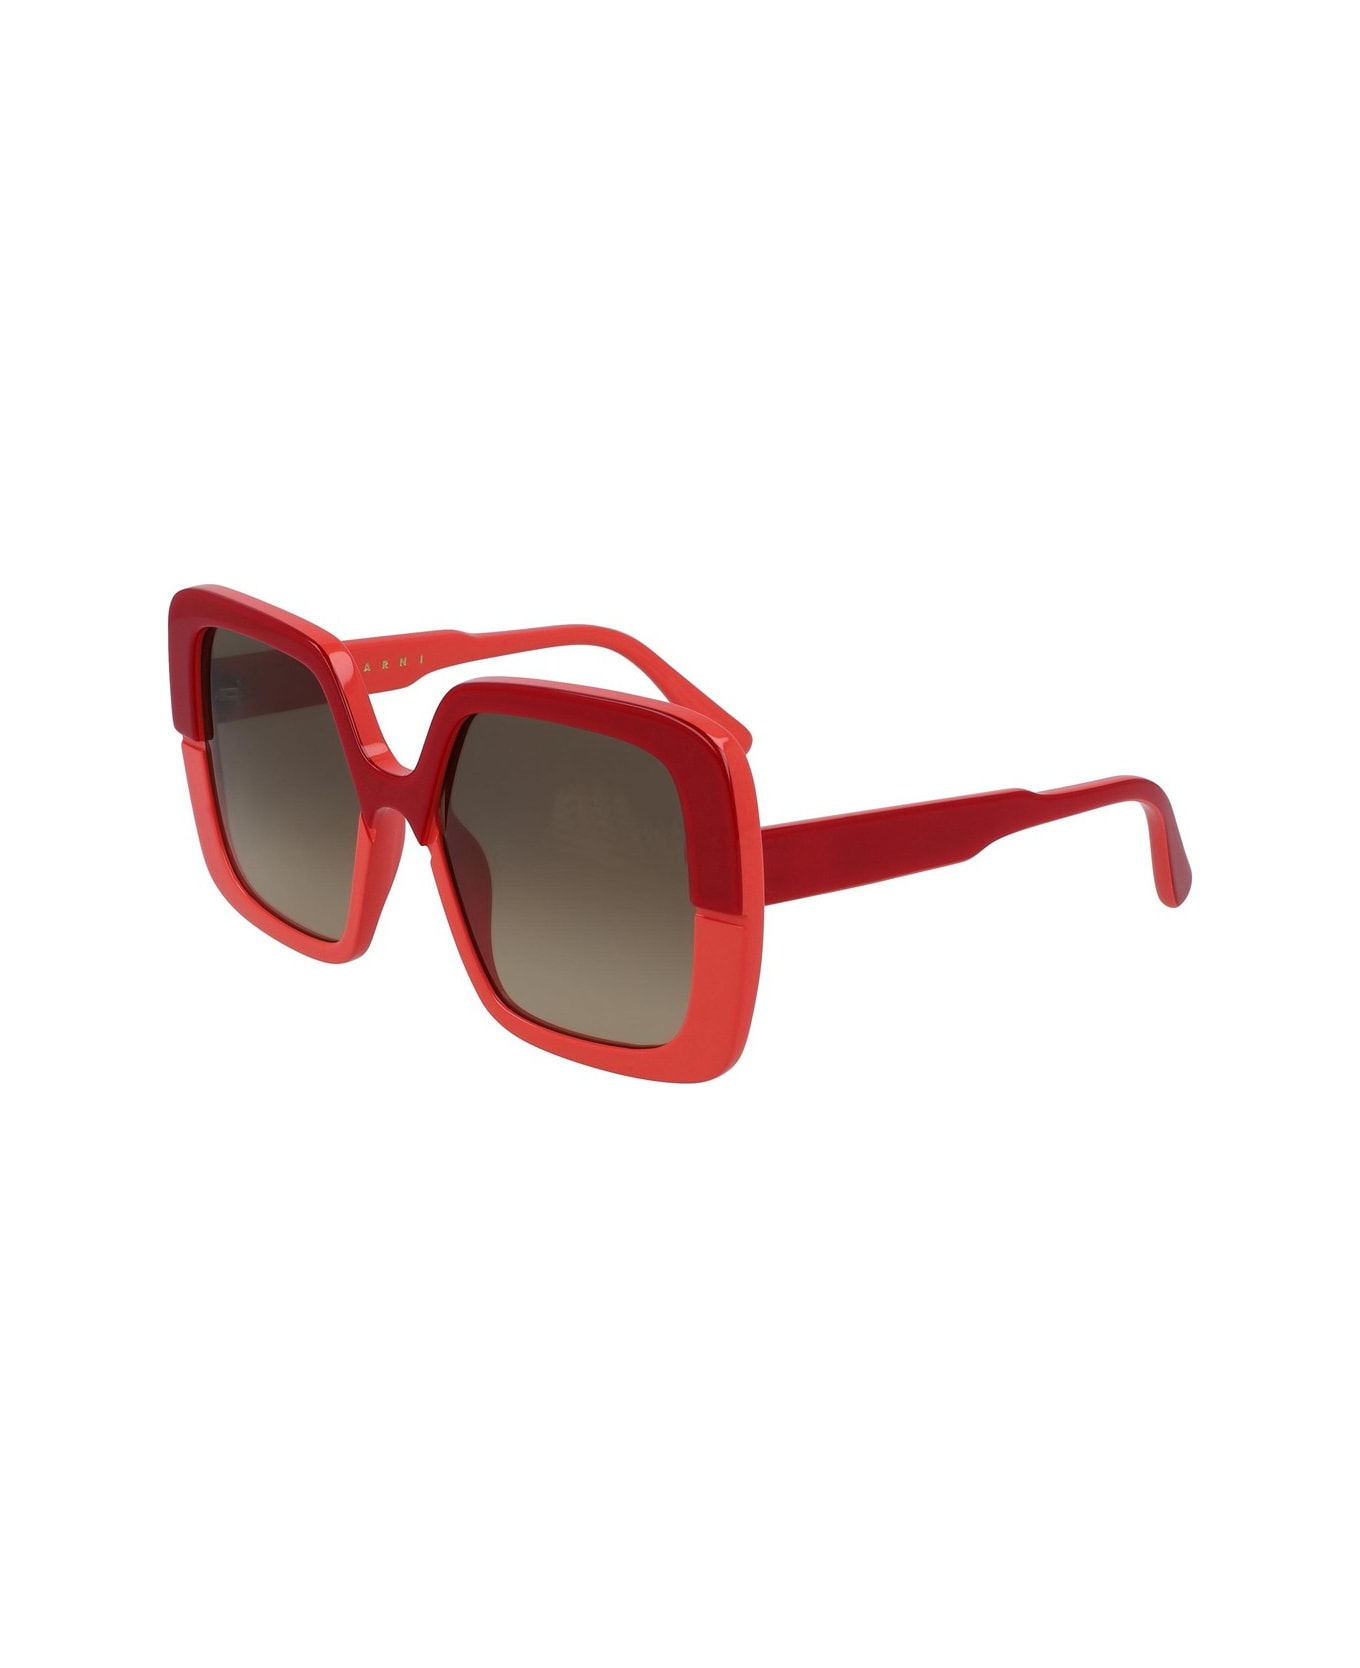 Marni Eyewear Me643s Sunglasses - Rosso